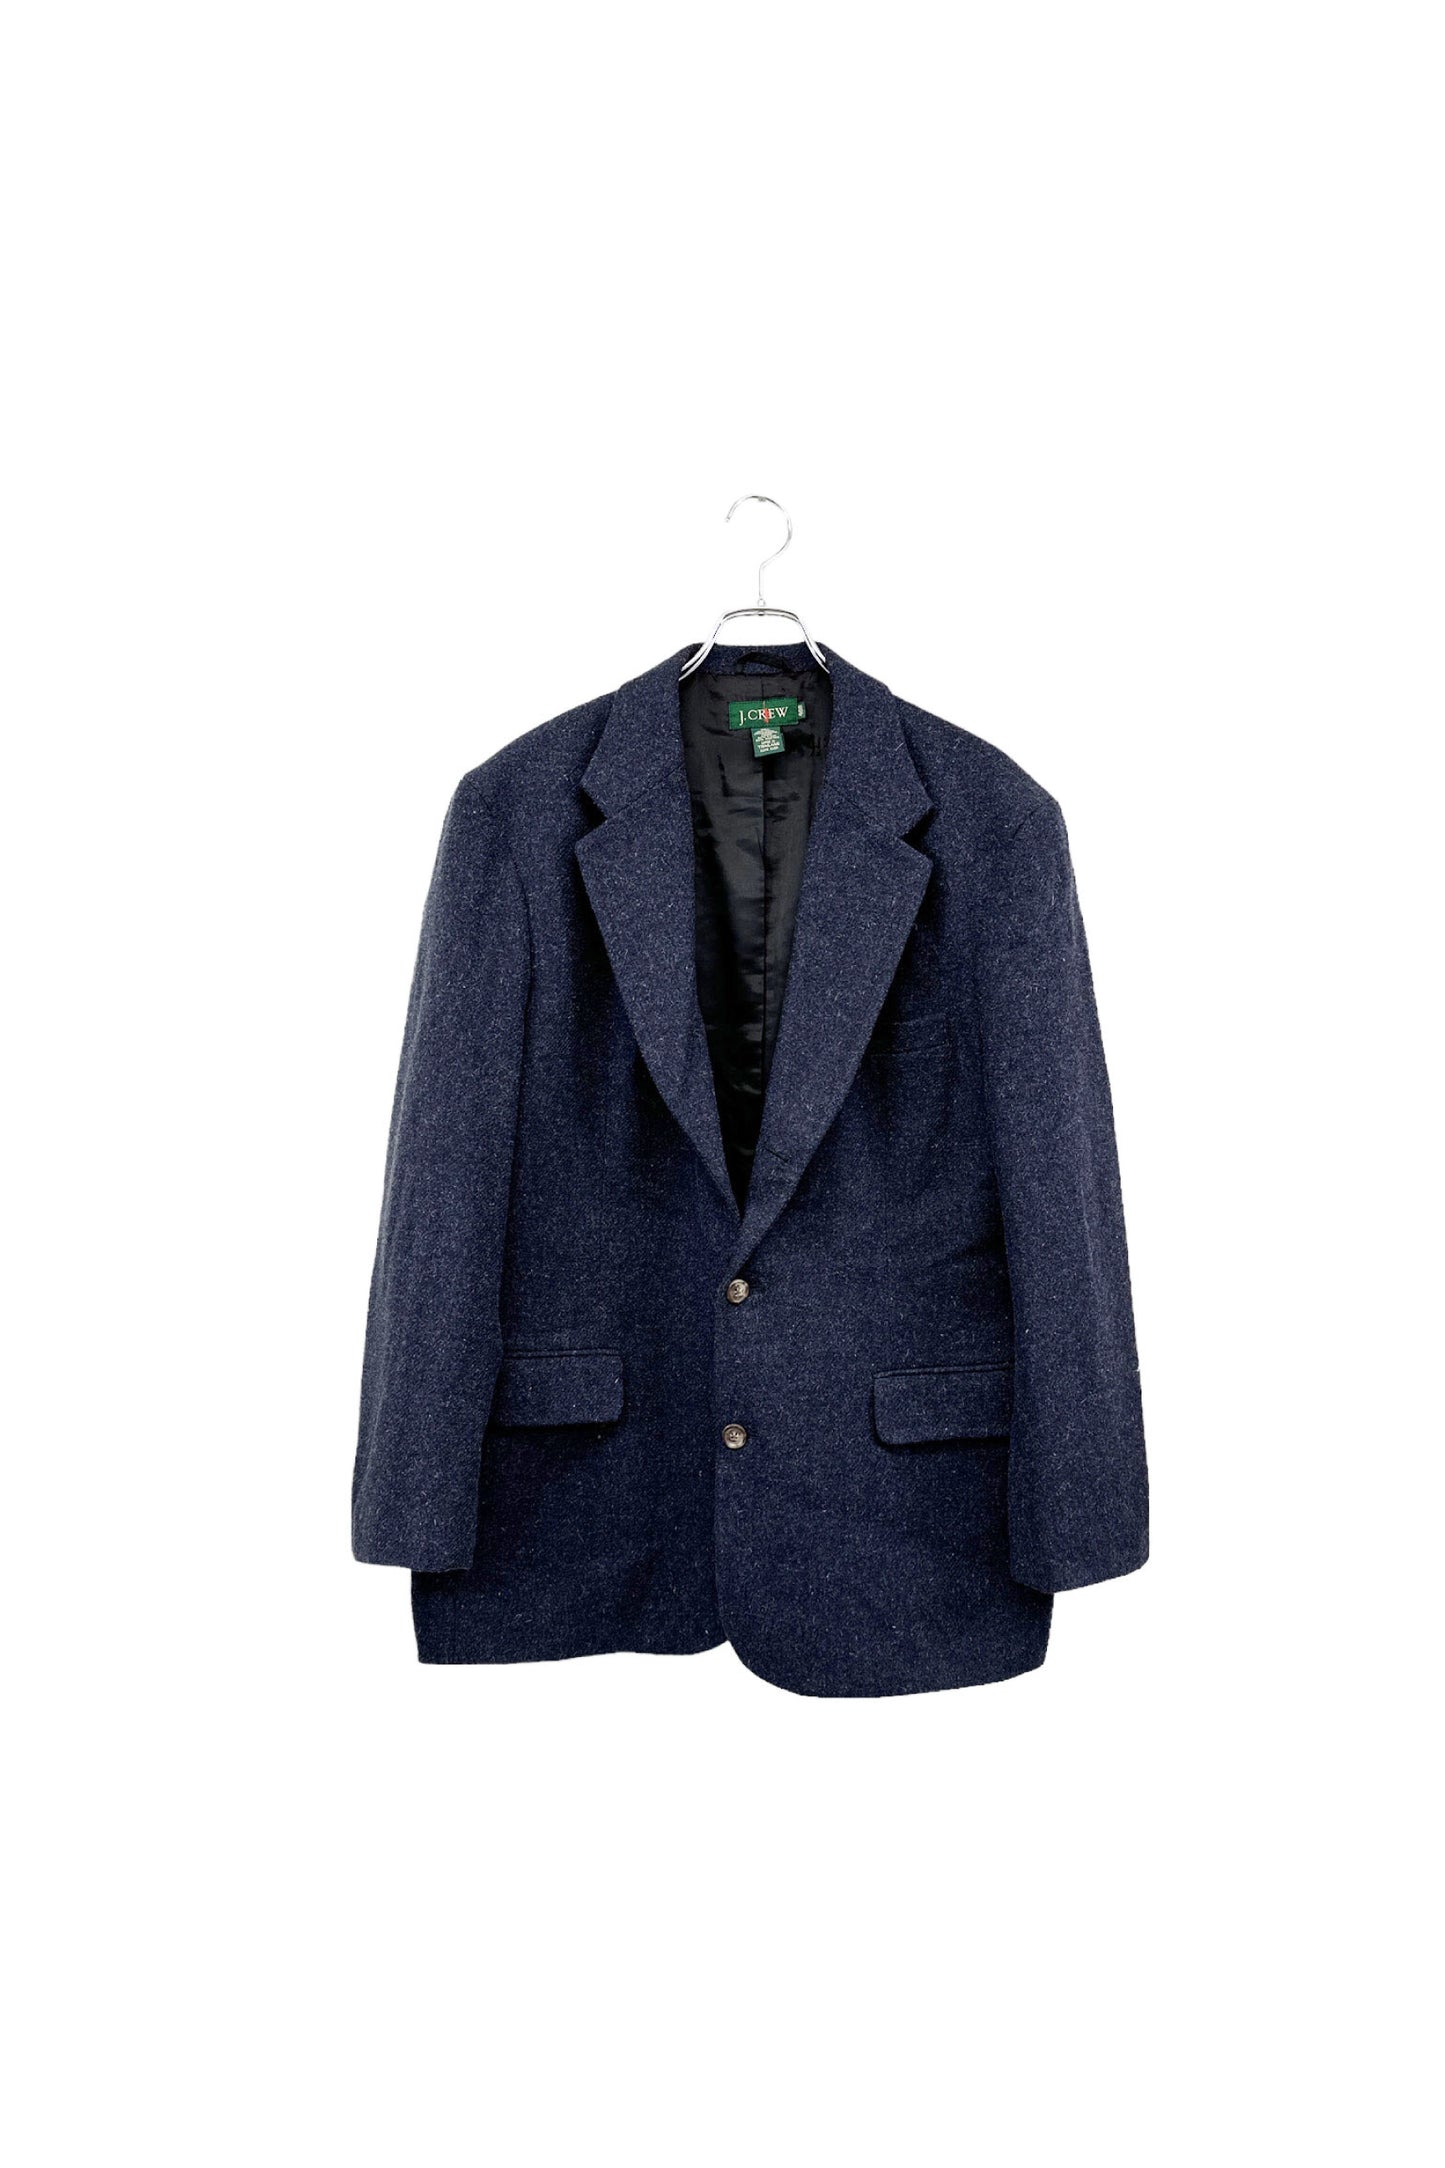 90's J.CREW tailored jacket